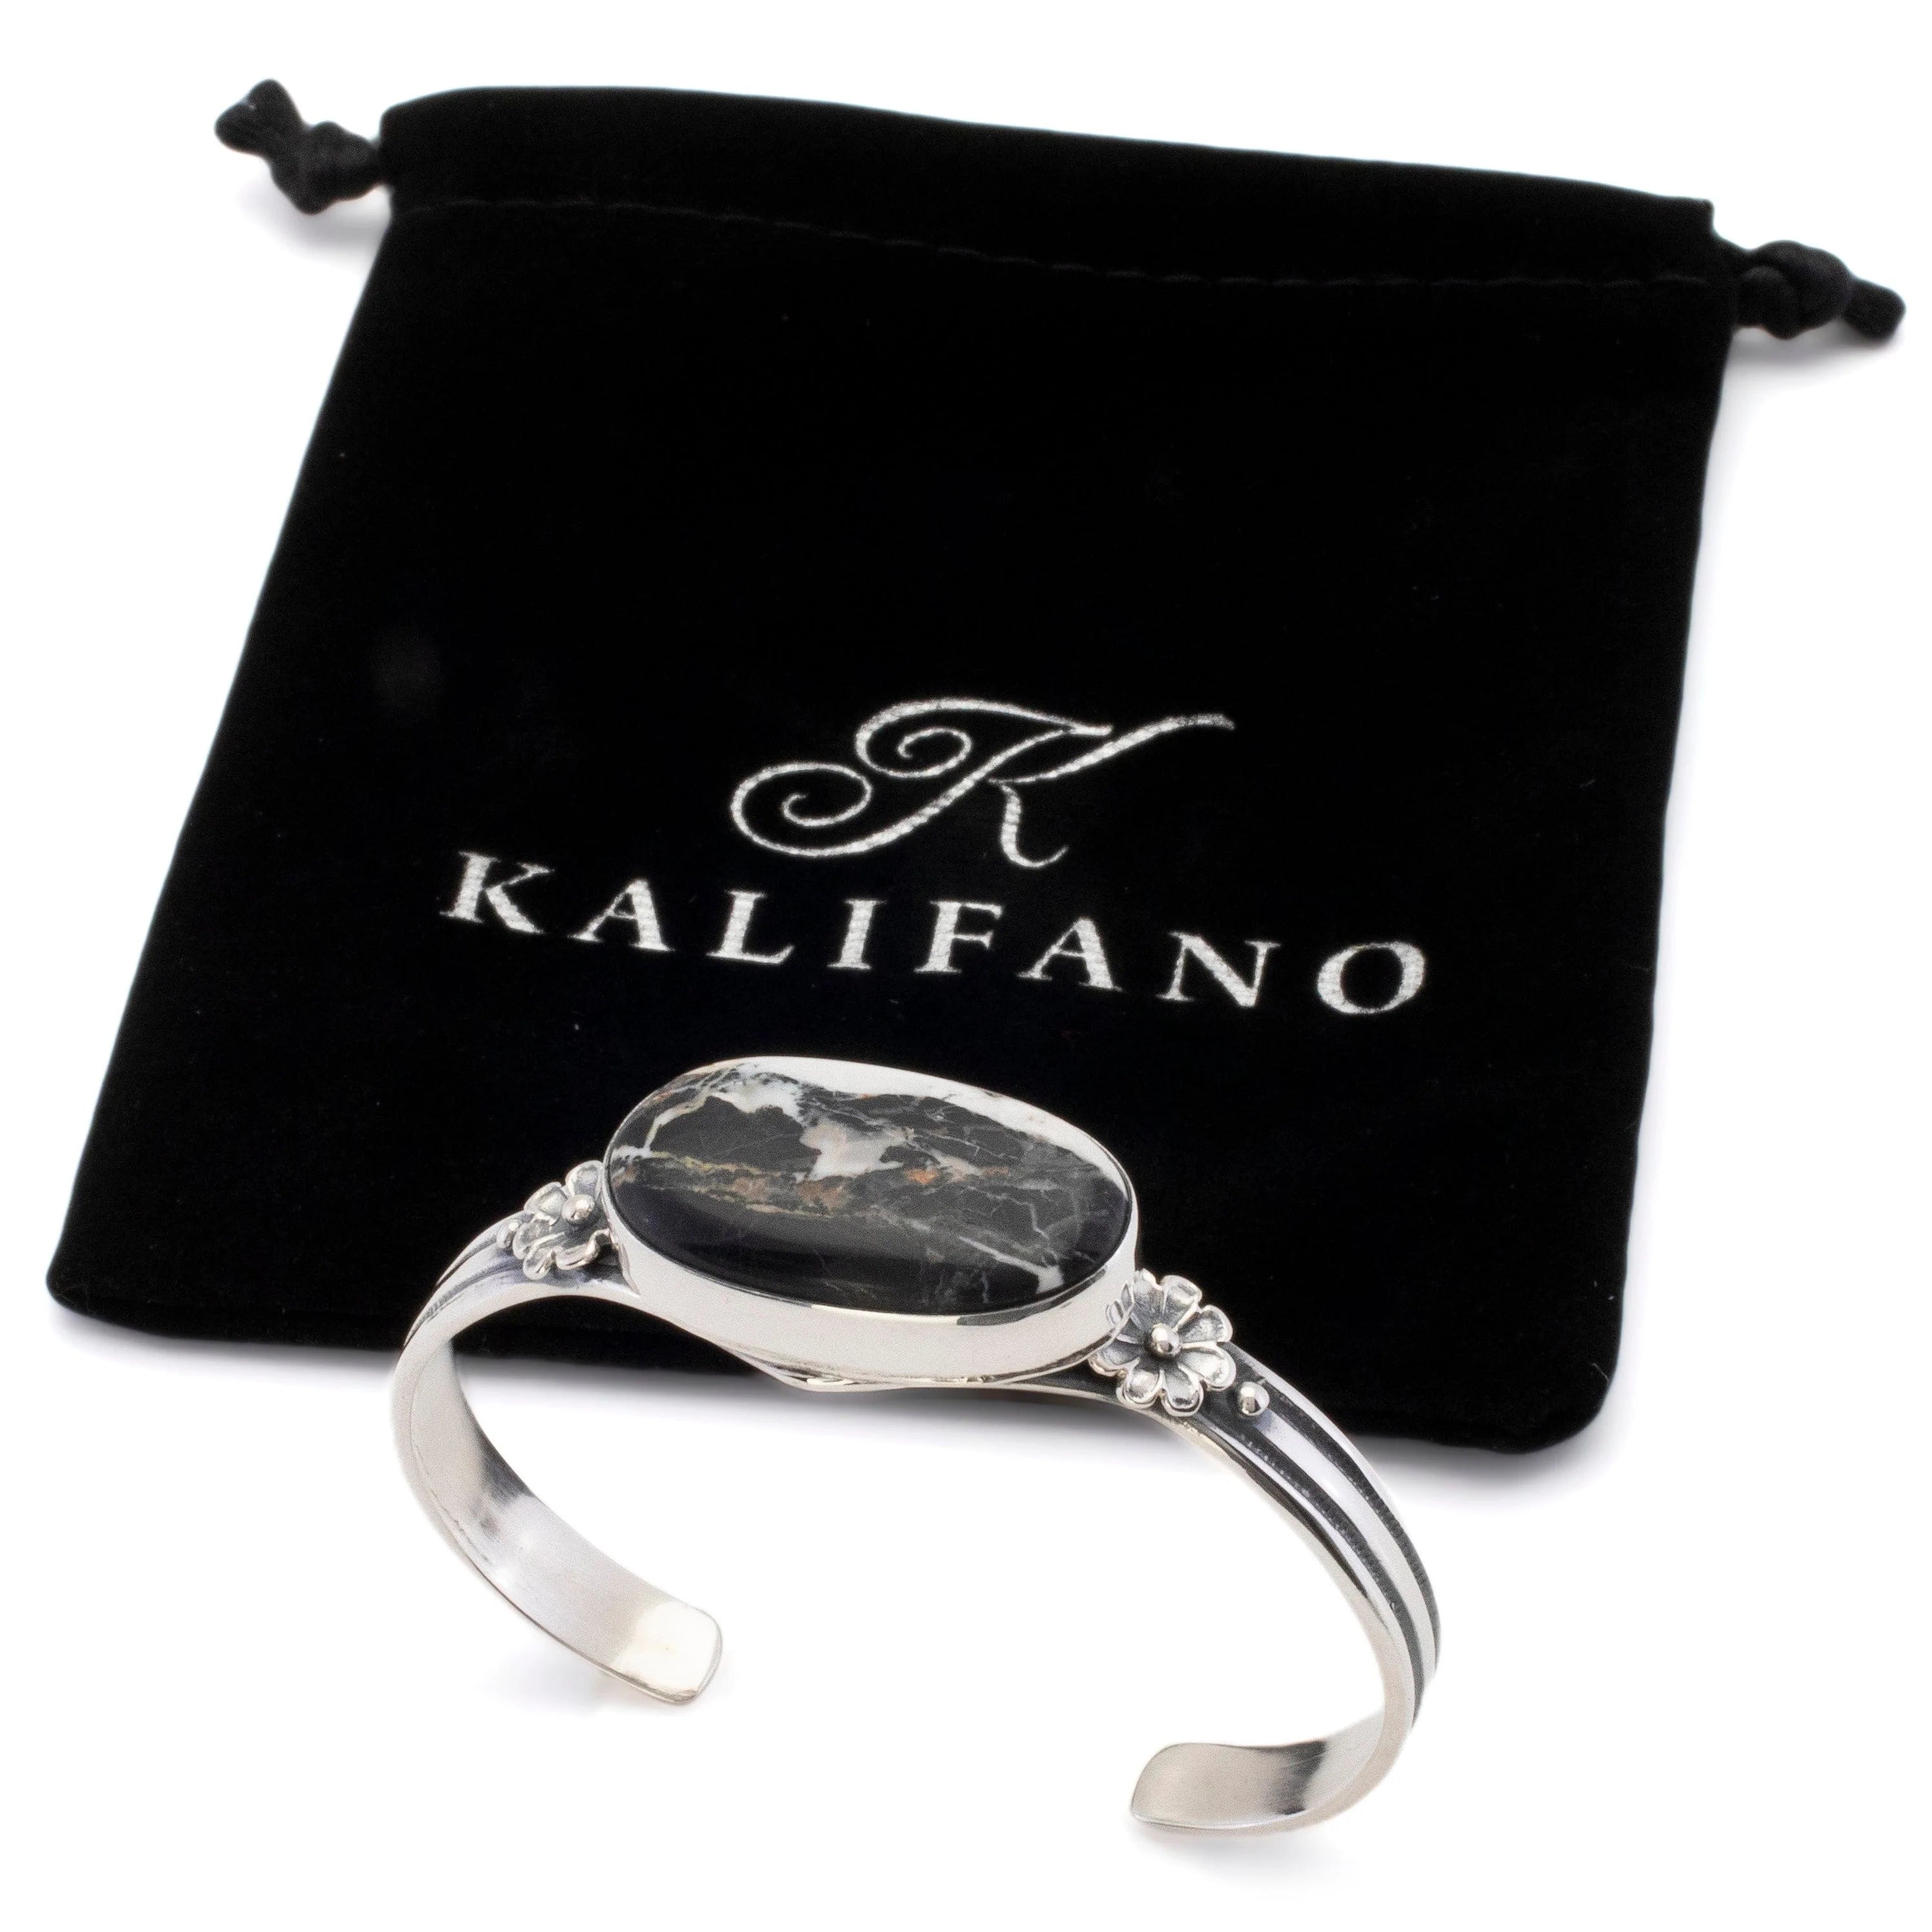 Kalifano Southwest Silver Jewelry Oval White Buffalo Turquoise USA Handmade 925 Sterling Silver Cuff NMB850.001